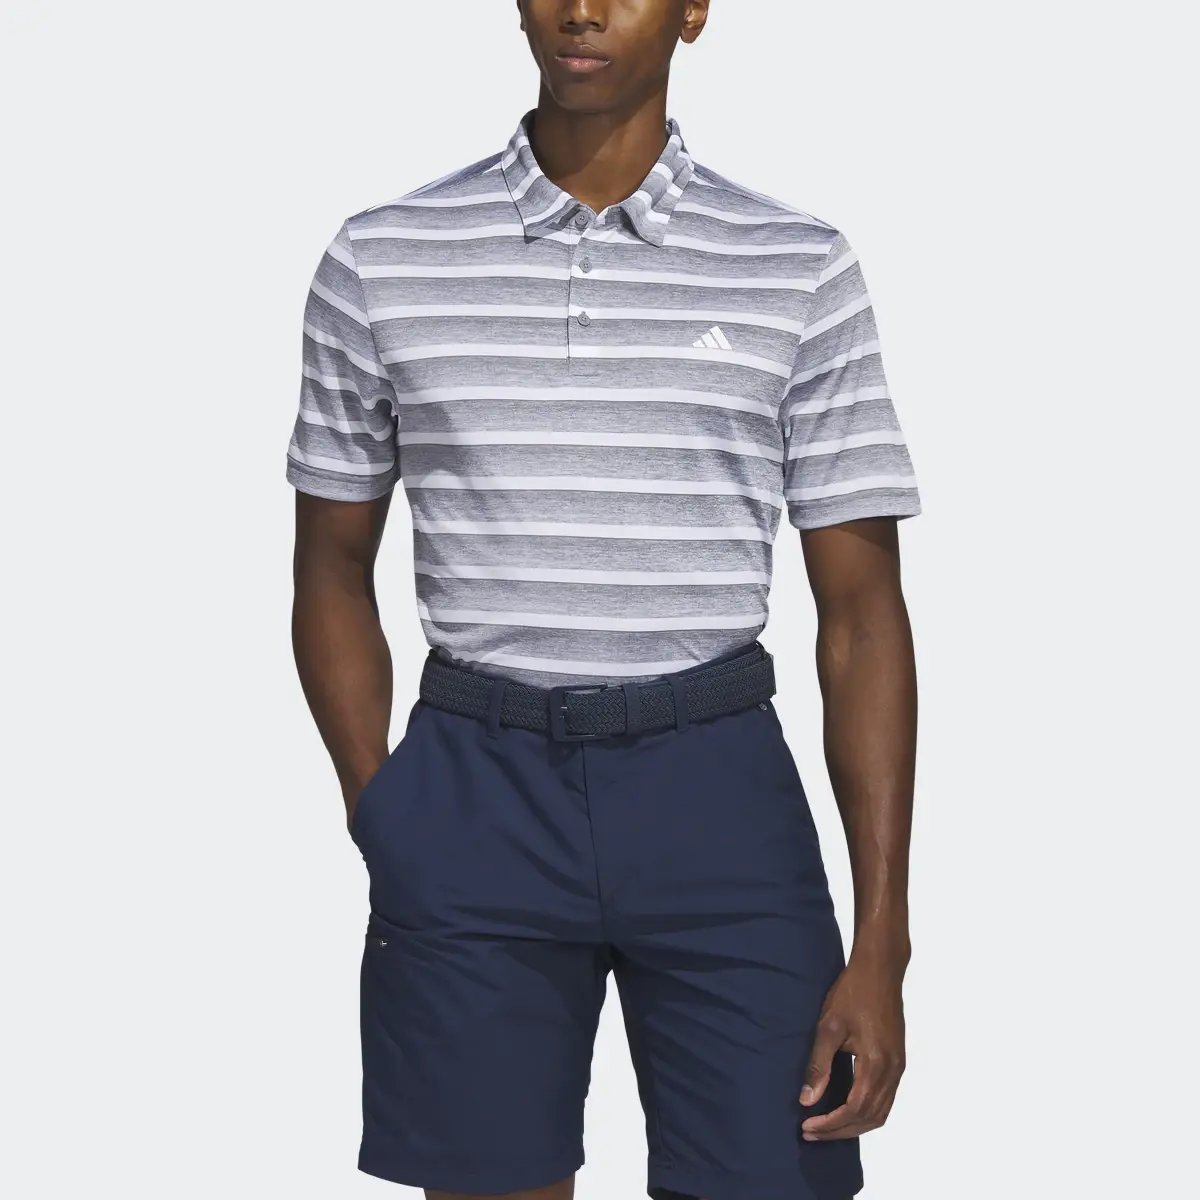 Adidas Two-Color Striped Golf Polo Shirt. 1